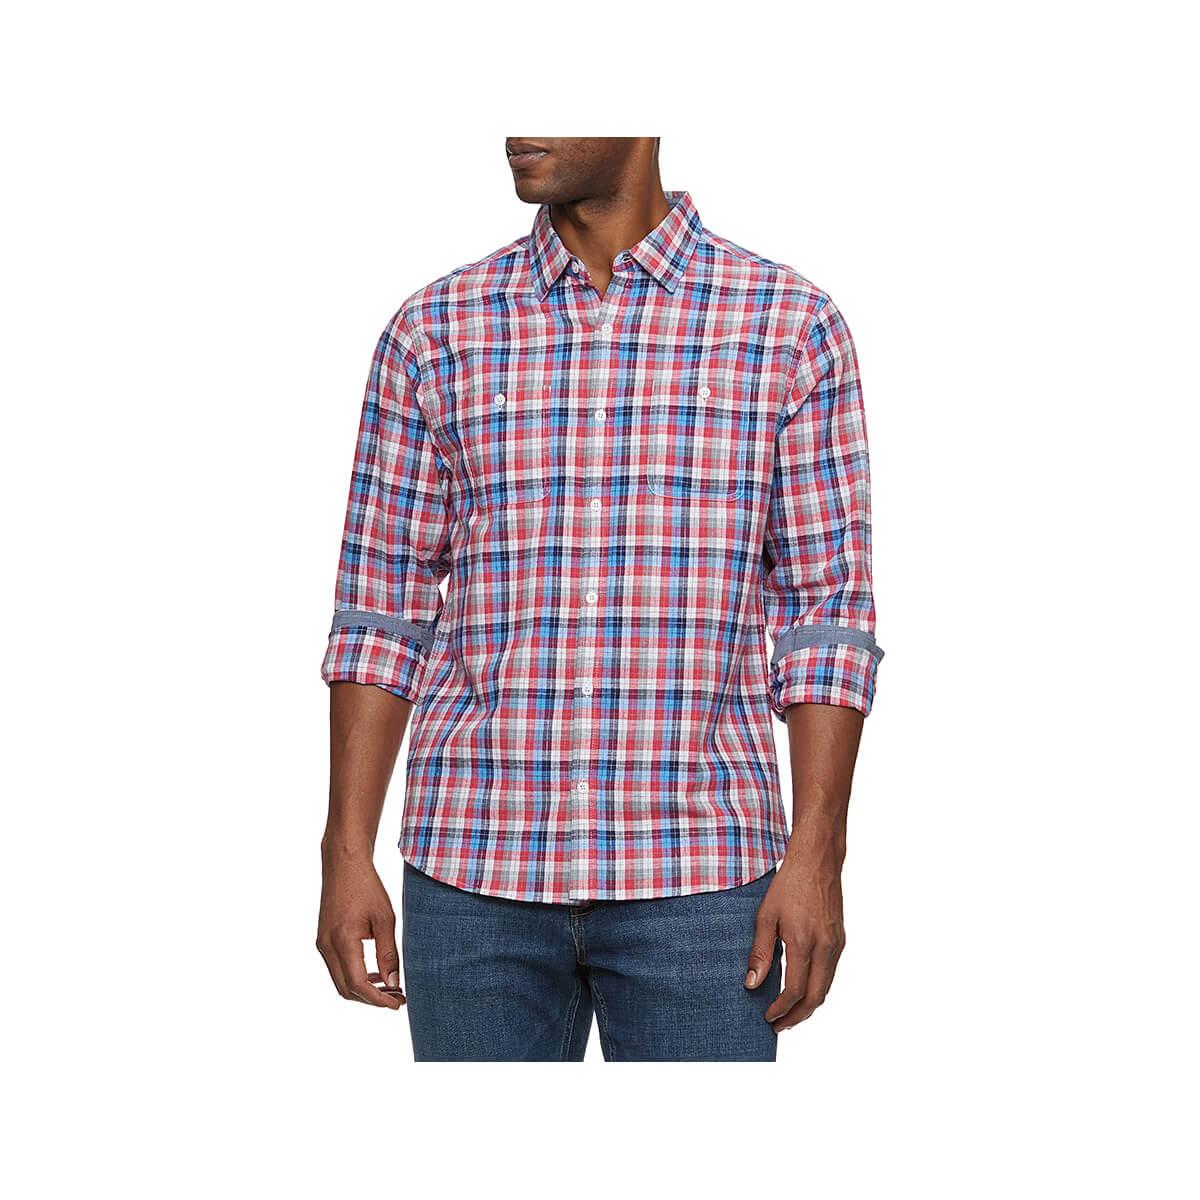  Men's Midvale Long Sleeve Double Pocket Shirt